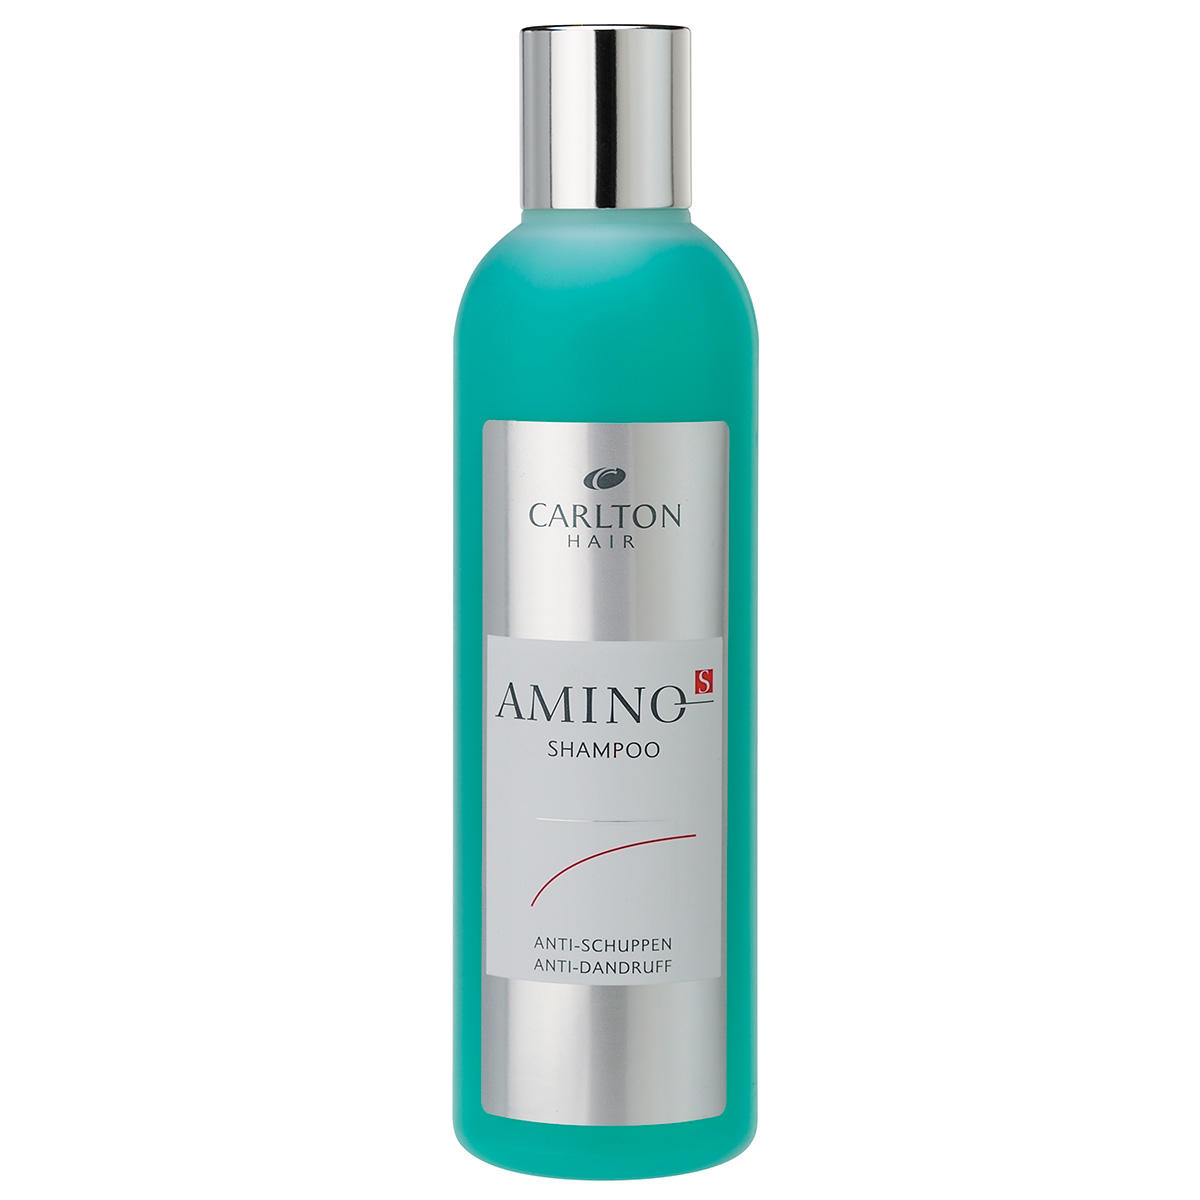 CARLTON AMINO S Anti-Schuppen Shampoo 250 ml - 1